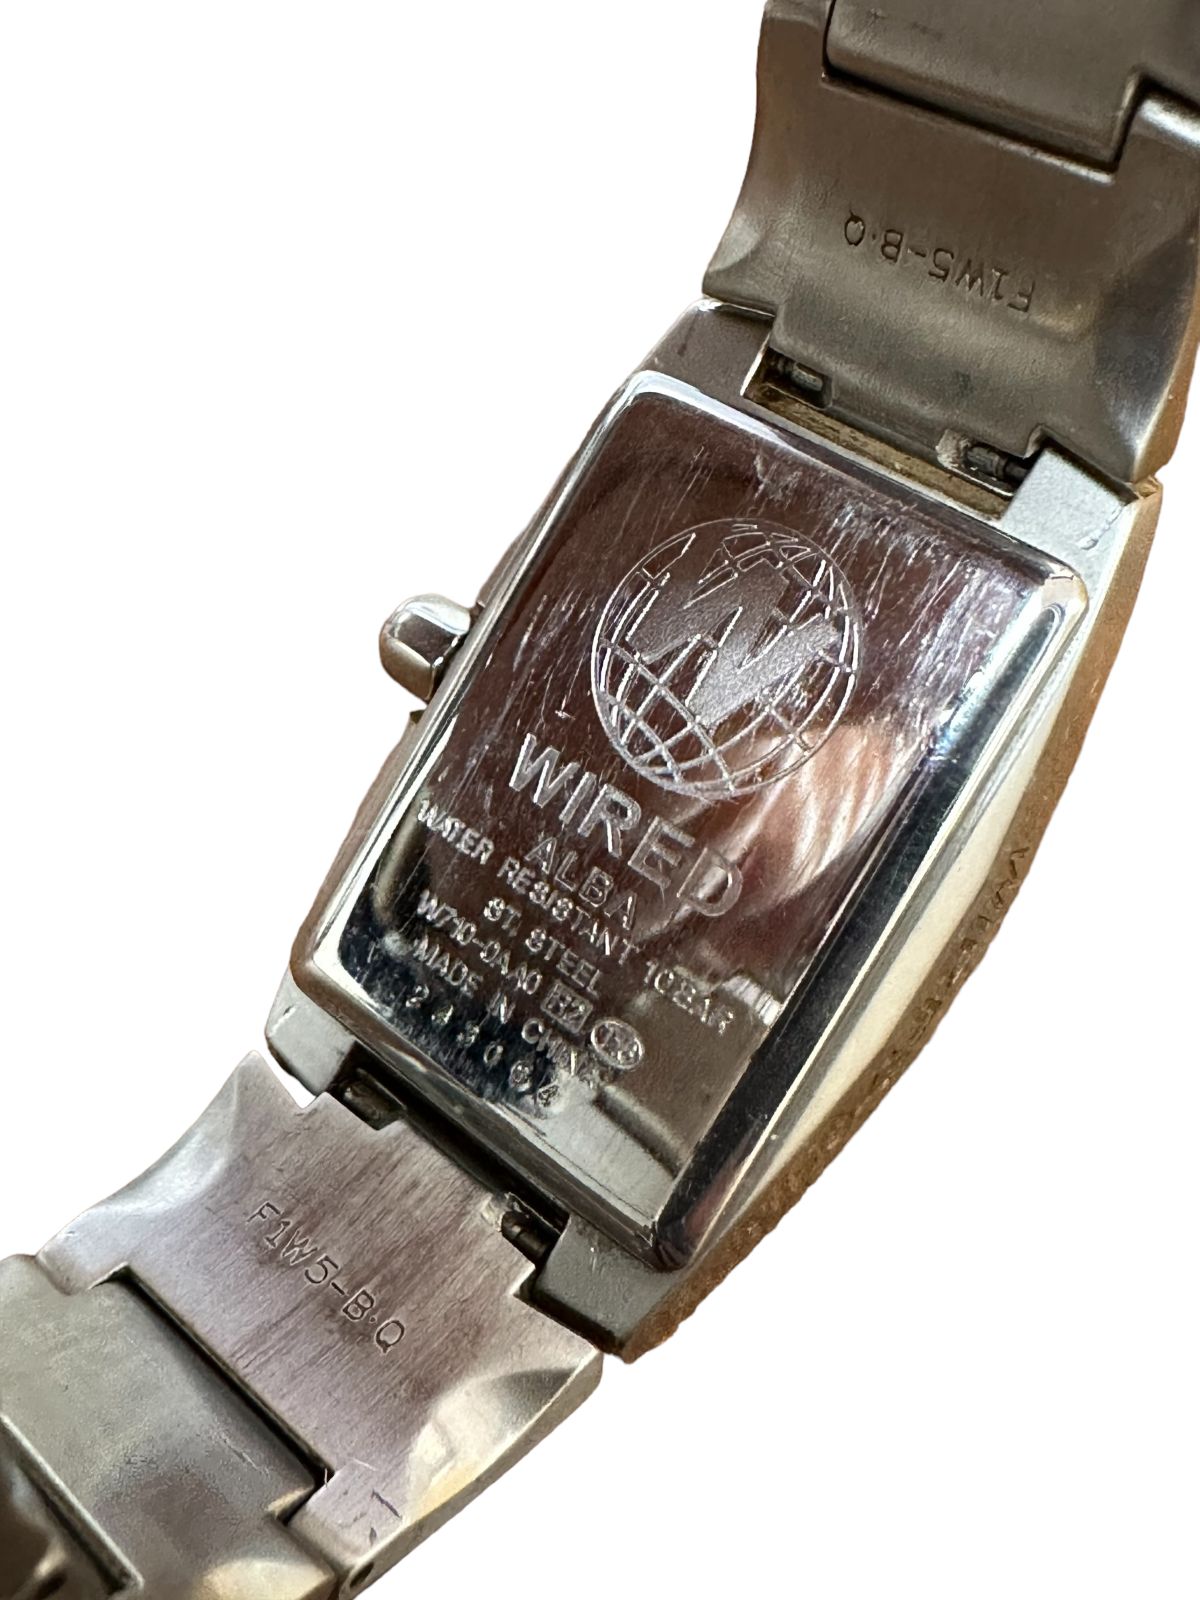 Wired レディース腕時計 ワイアード ALBA - 時計